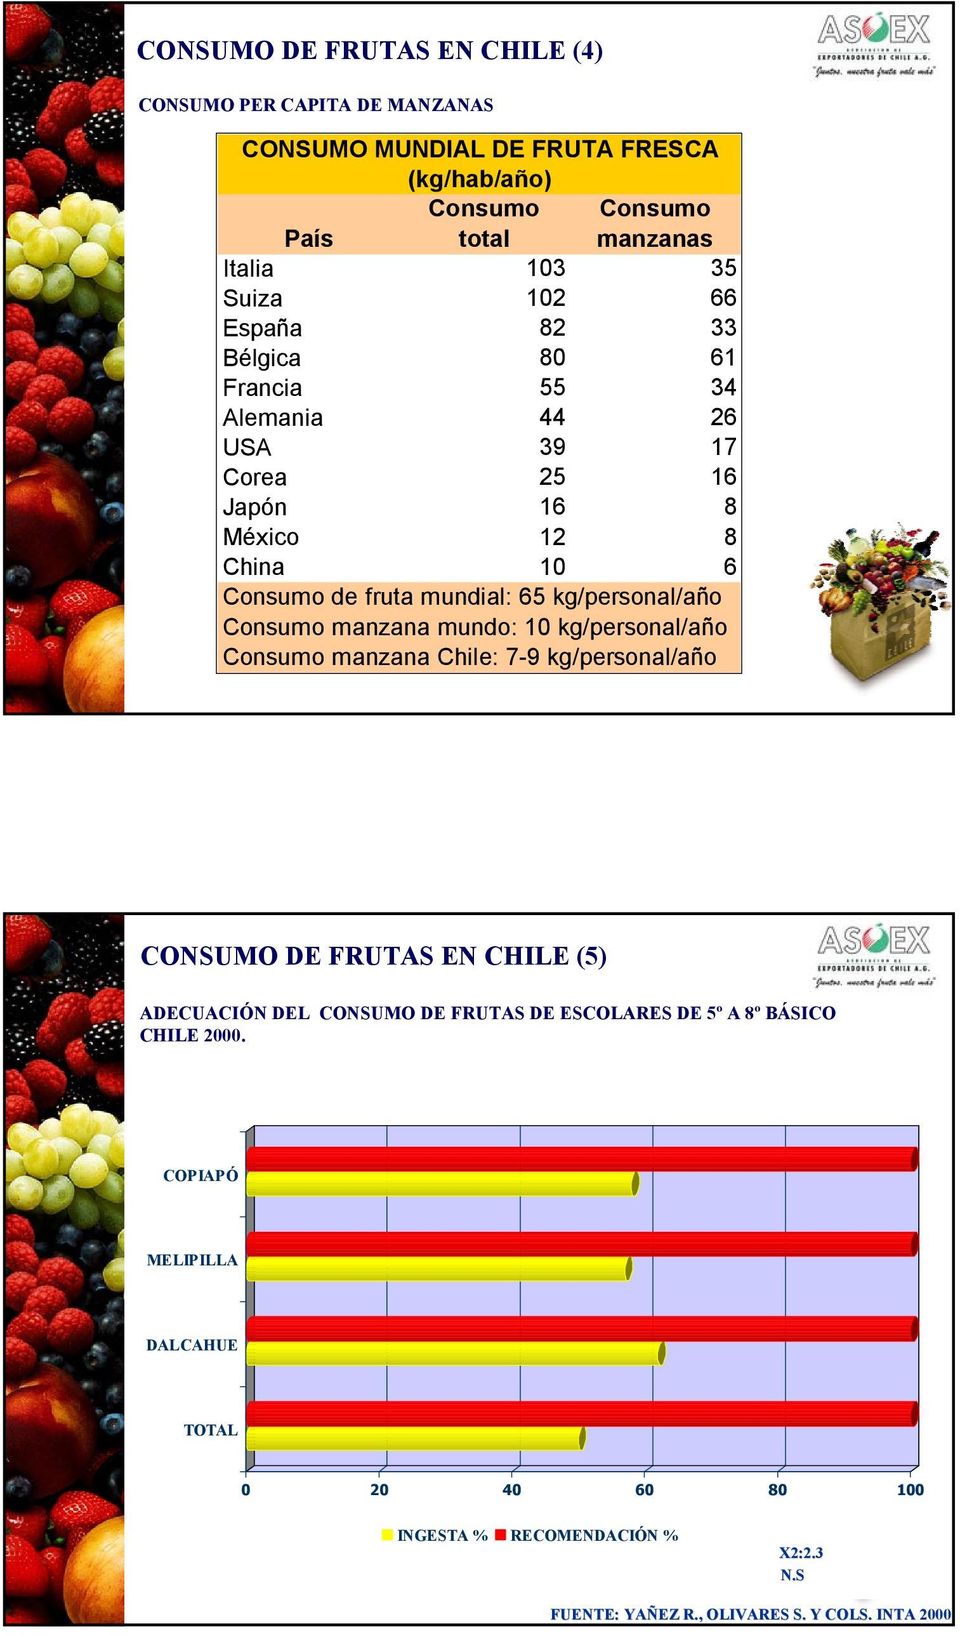 Consumo manzana mundo: 10 kg/personal/año Consumo manzana Chile: 7-9 kg/personal/año CONSUMO DE FRUTAS EN CHILE (5) ADECUACIÓN DEL CONSUMO DE FRUTAS DE ESCOLARES